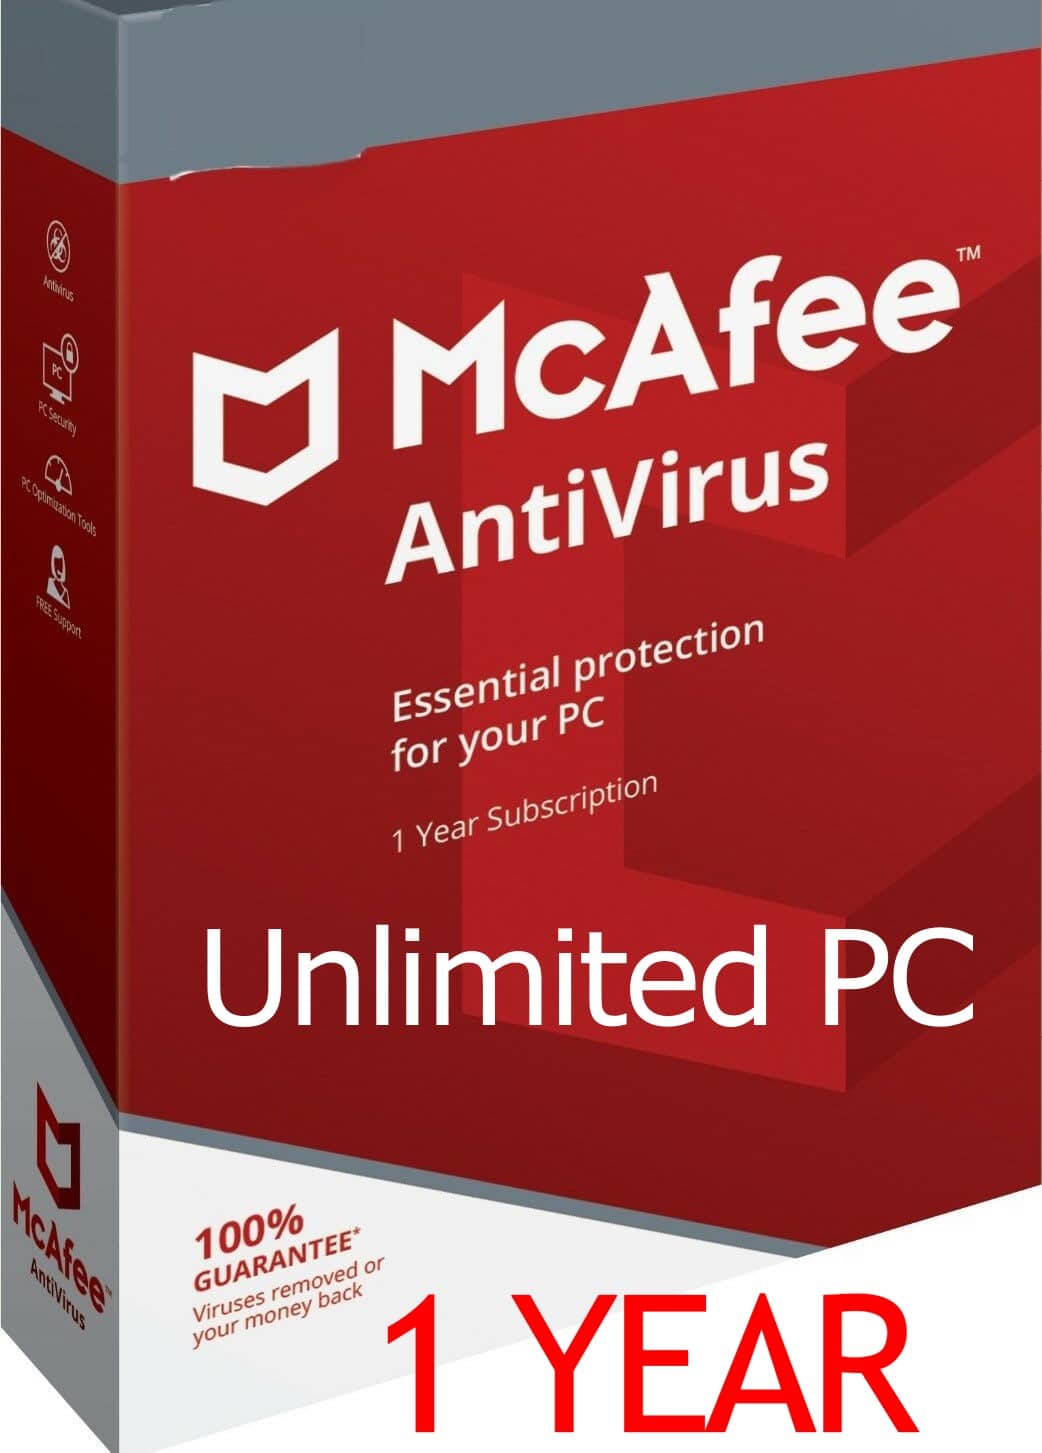 centurylink free mcafee antivirus download